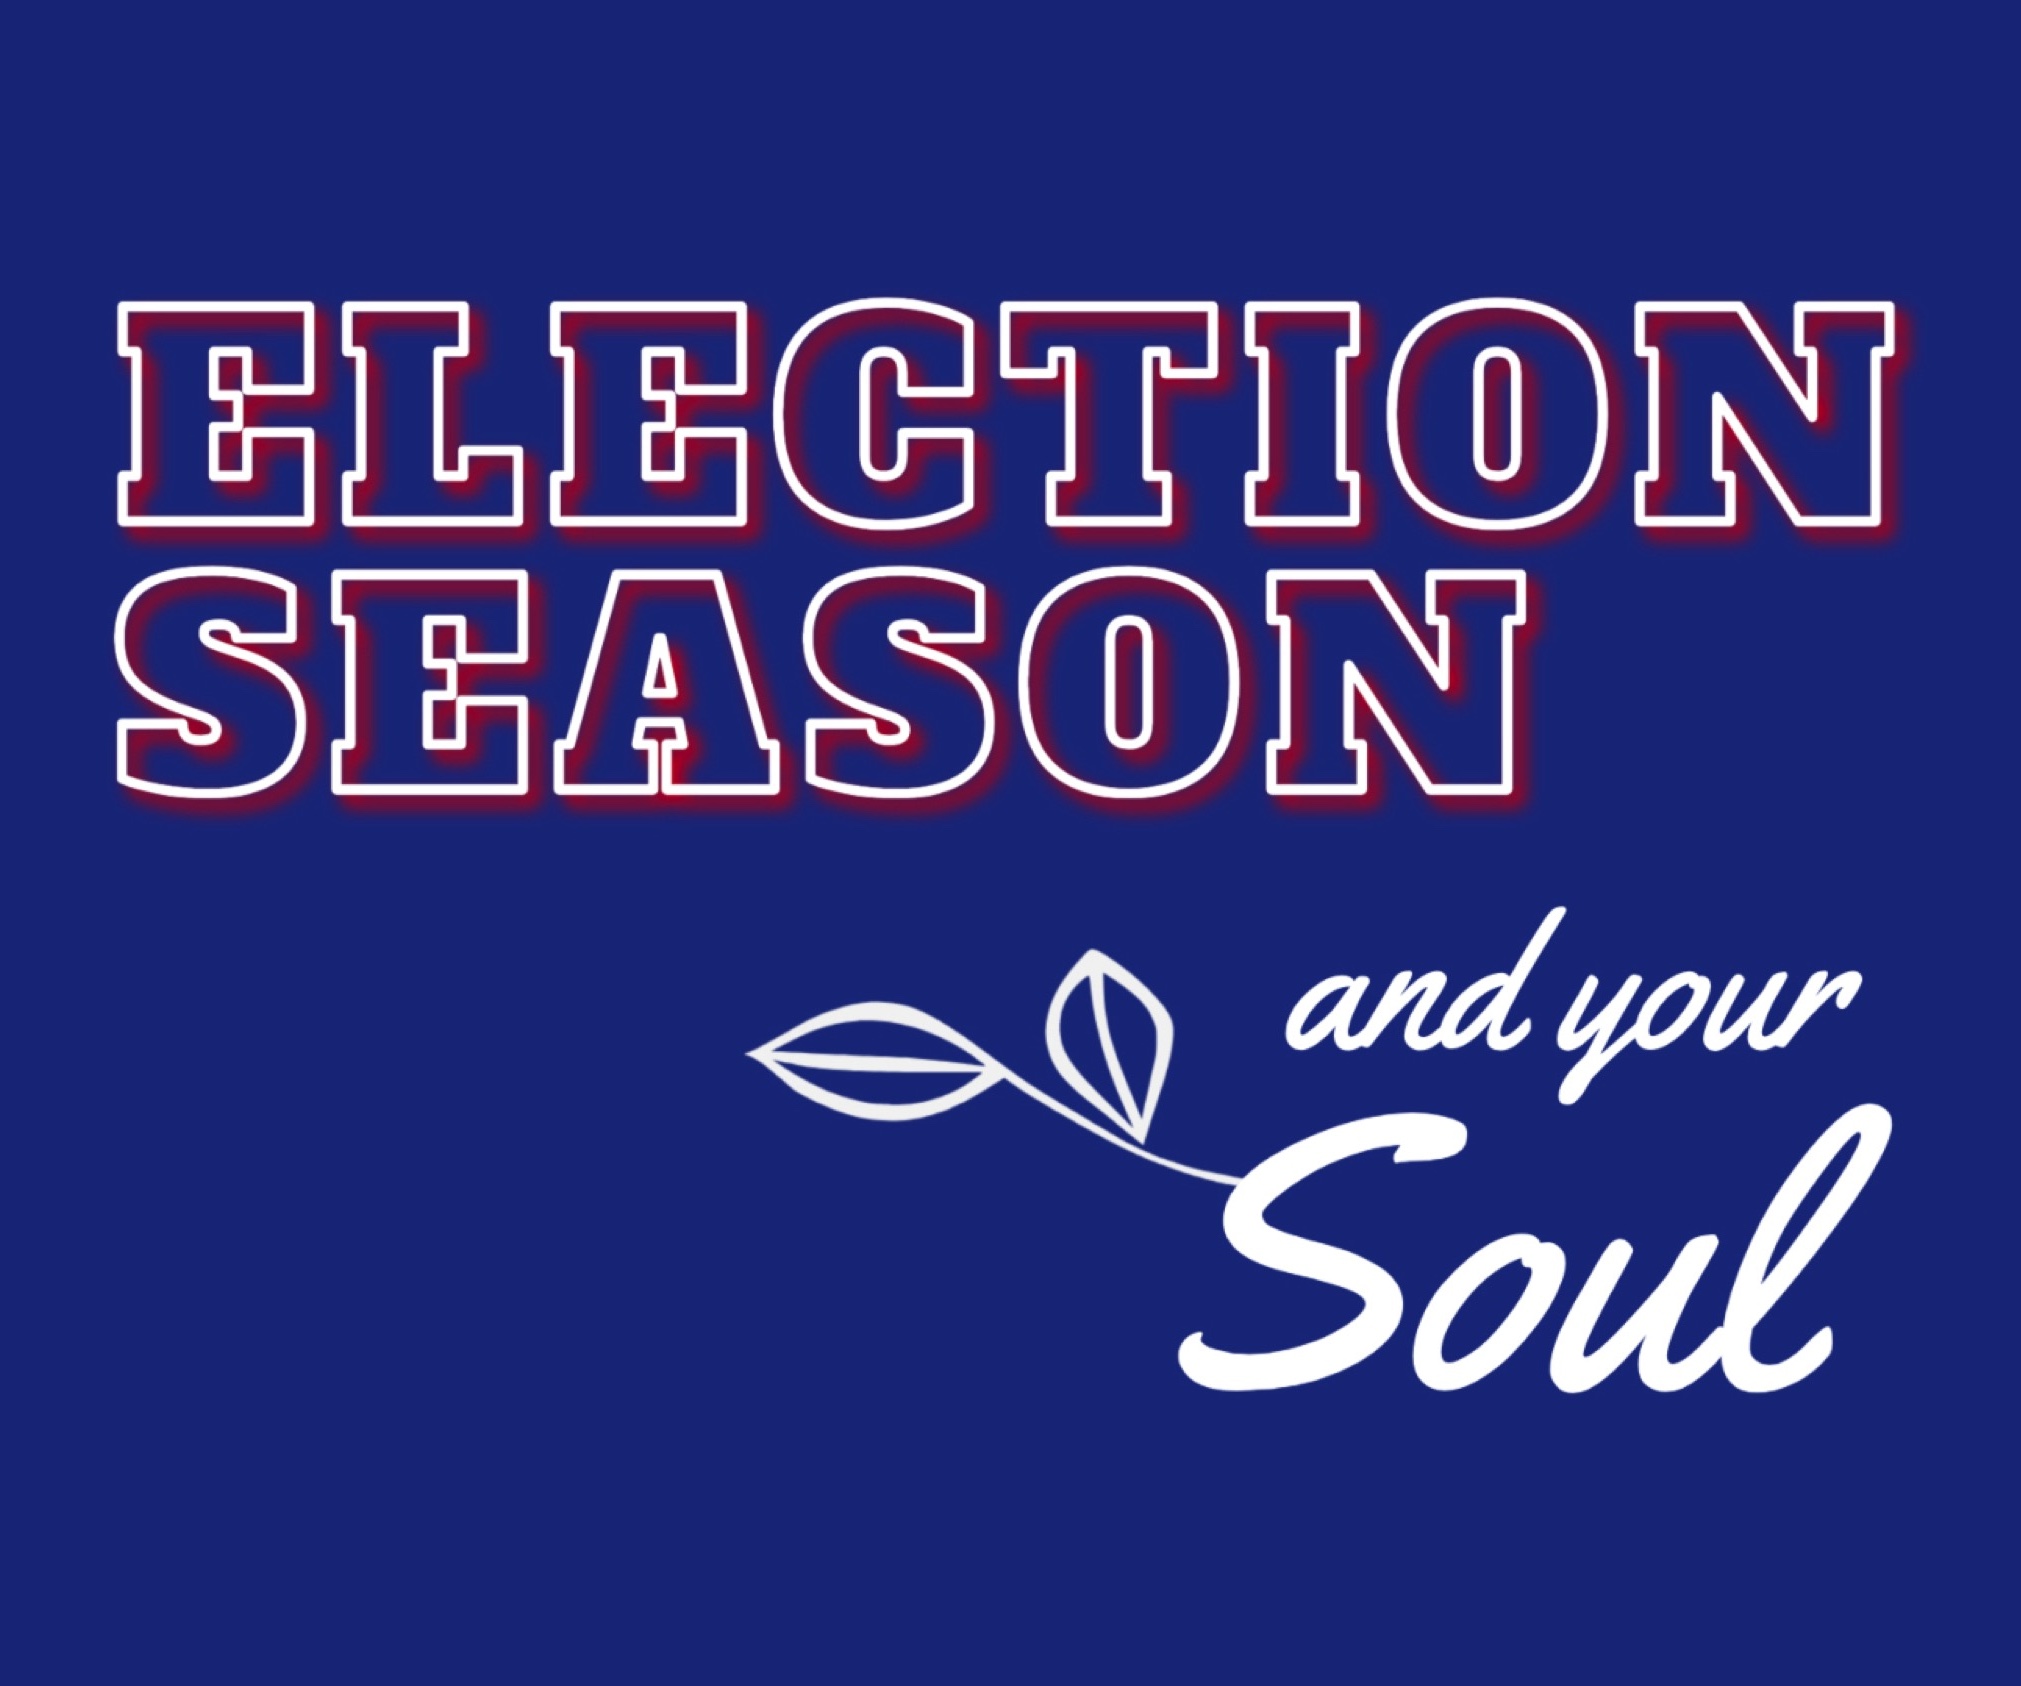 Ryan Post - "Election Season and Your Soul"